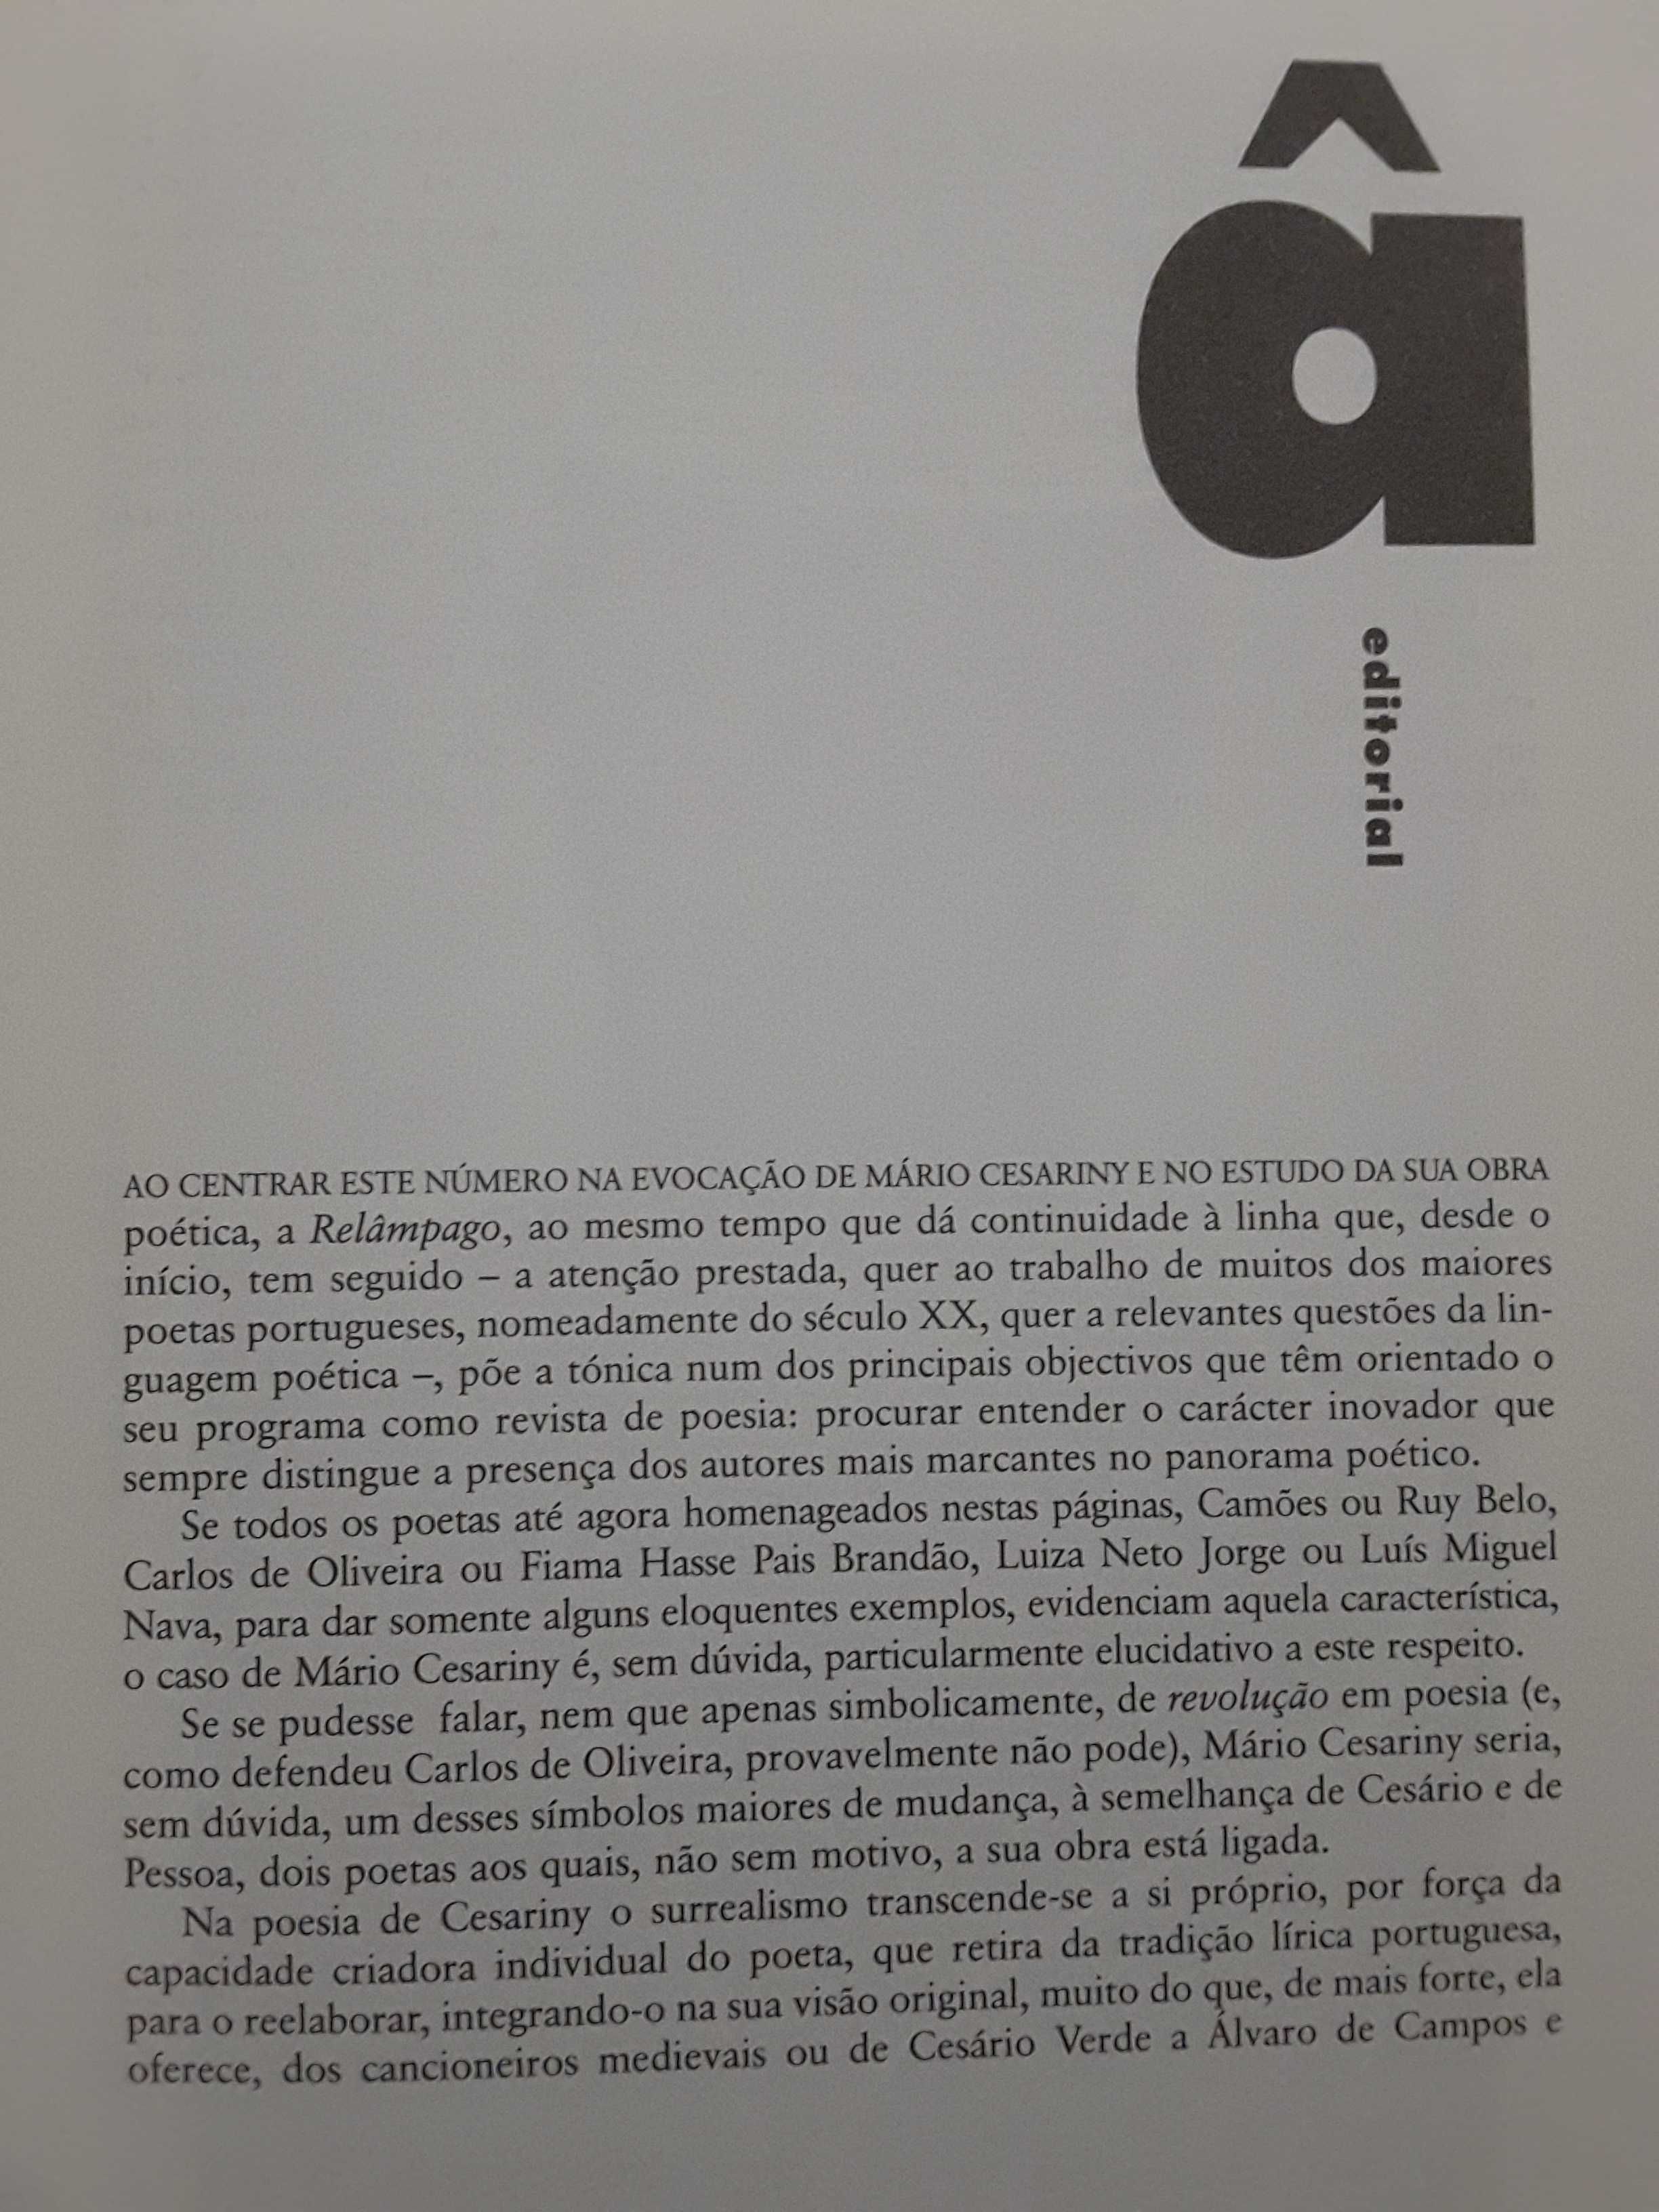 Relâmpago, Revista de Poesia: Mário Cesariny / Luiza Neto Jorge